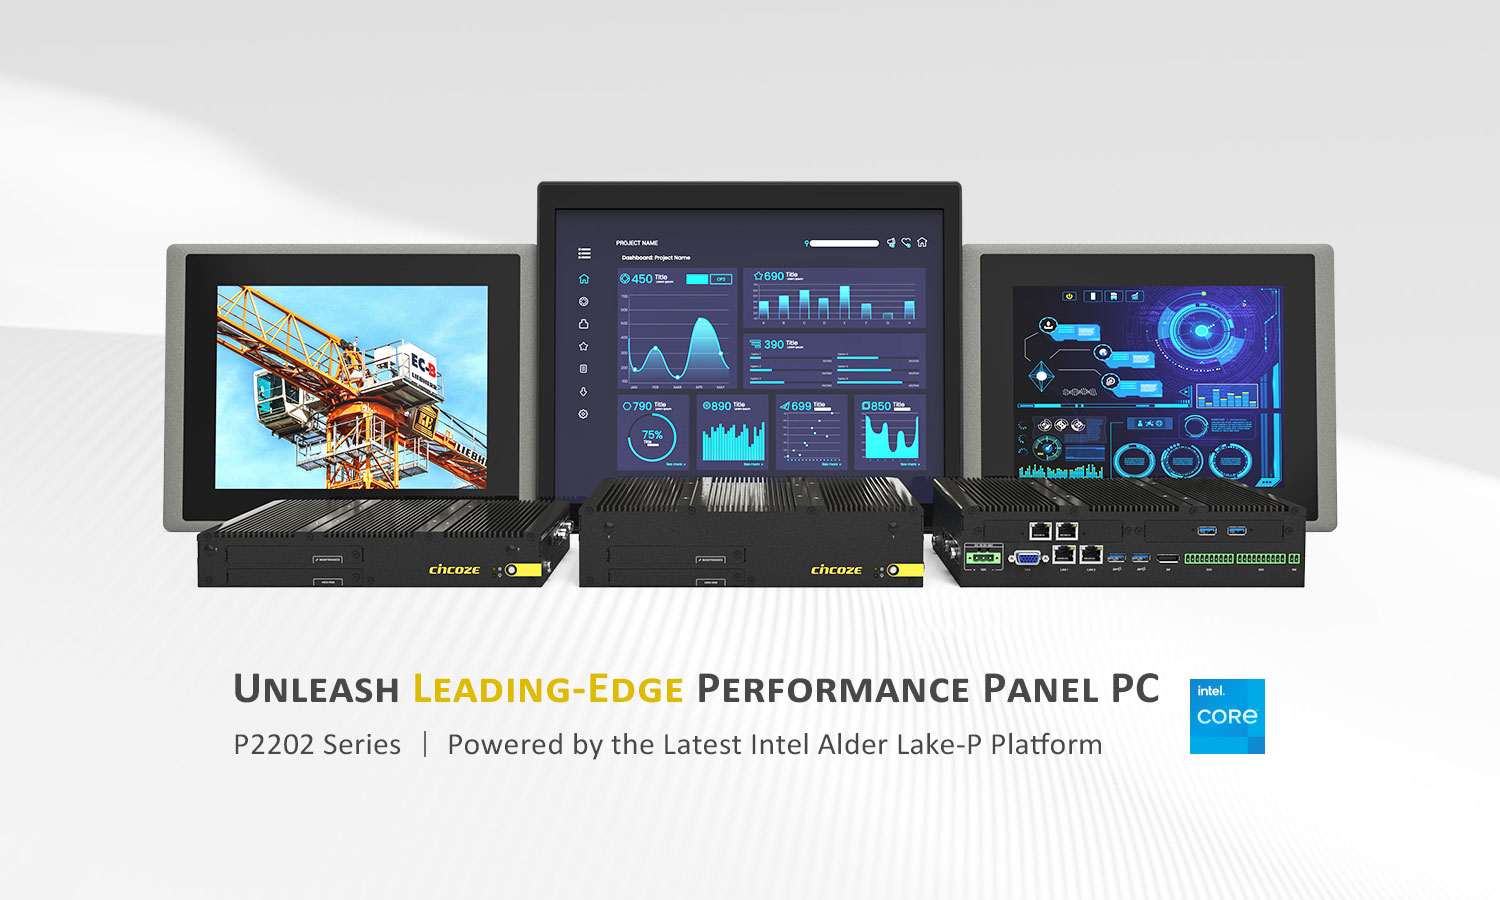 Cincoze P2202, Unleash Leading-Edge Performance Panel PC, Powered by the latest Intel Alder Lake-P platform